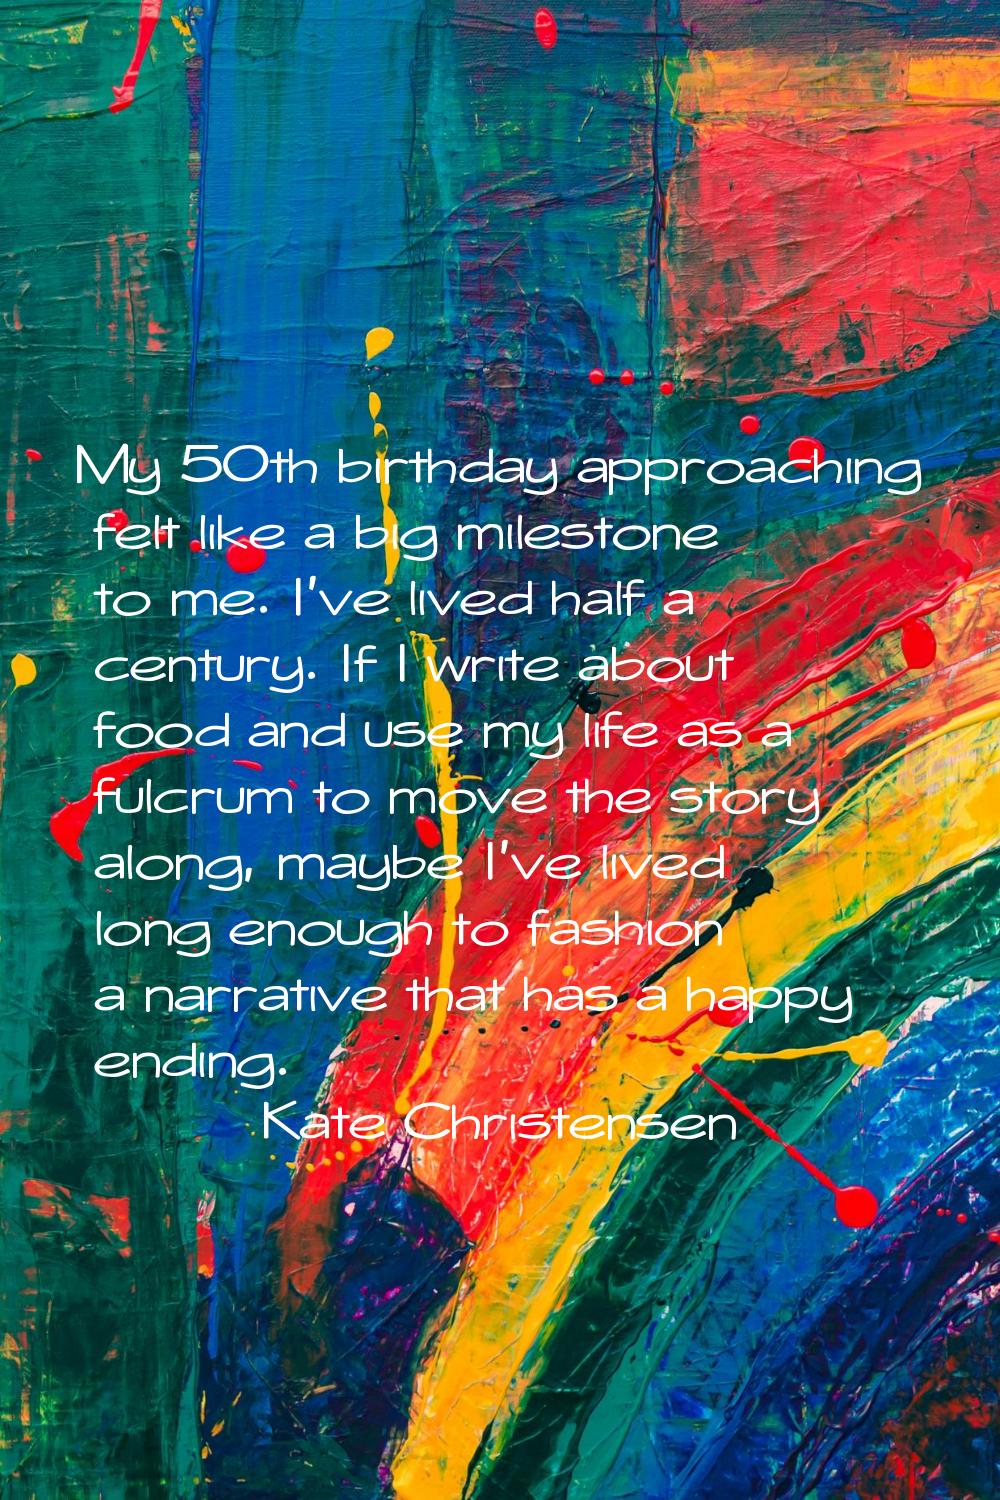 My 50th birthday approaching felt like a big milestone to me. I've lived half a century. If I write